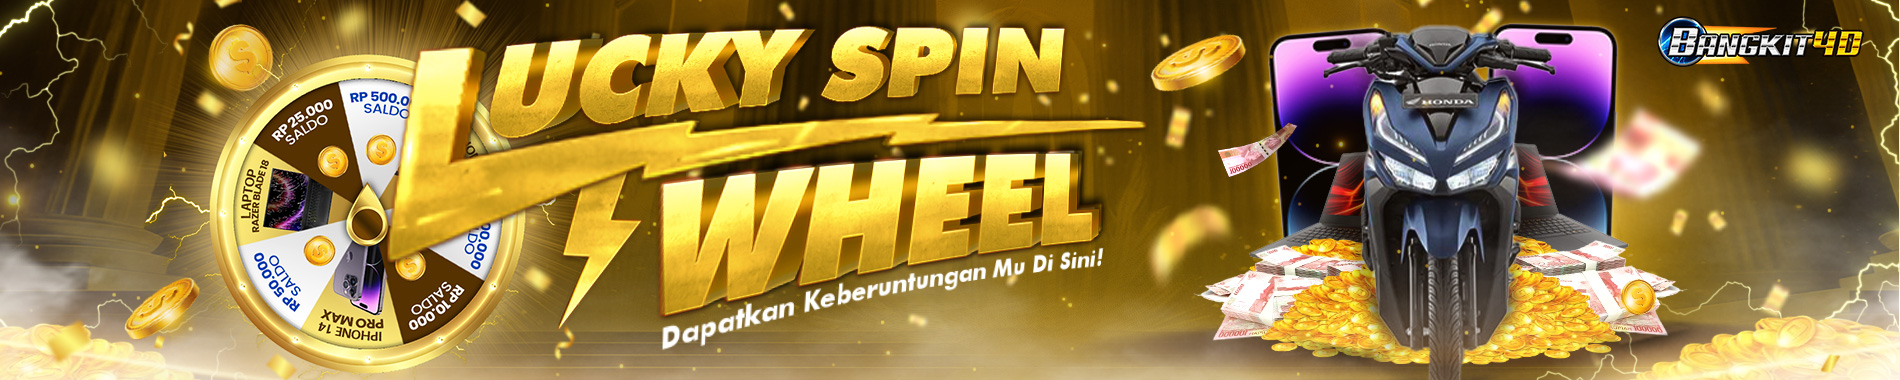 Lucky-Spin-Wheels-bangkit4d